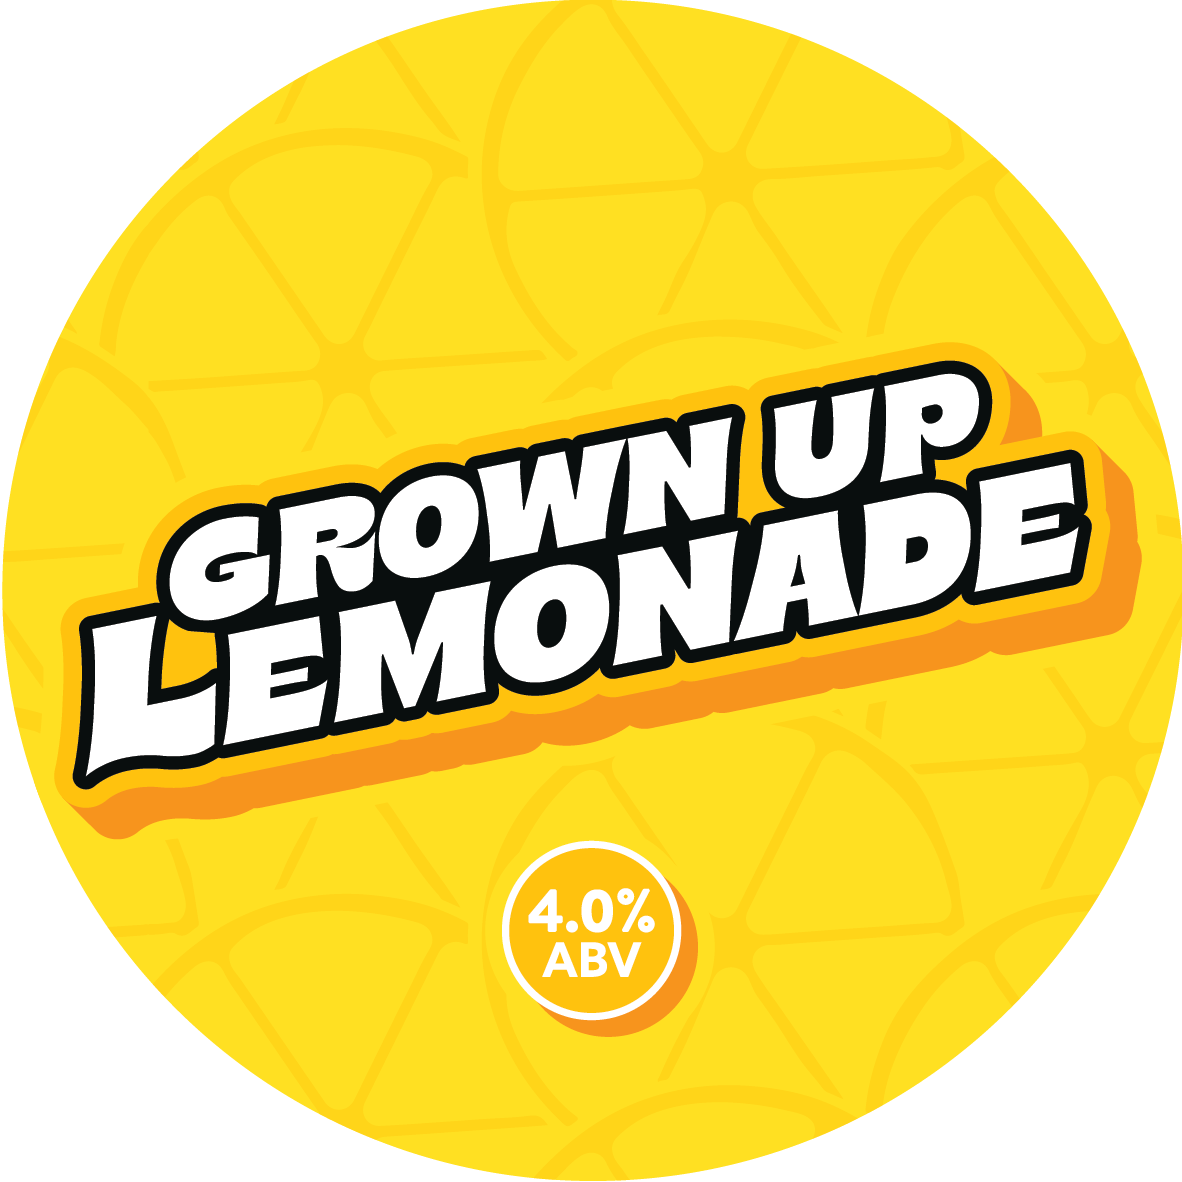 Sprig and Fern Grown Up Lemonade tap badge